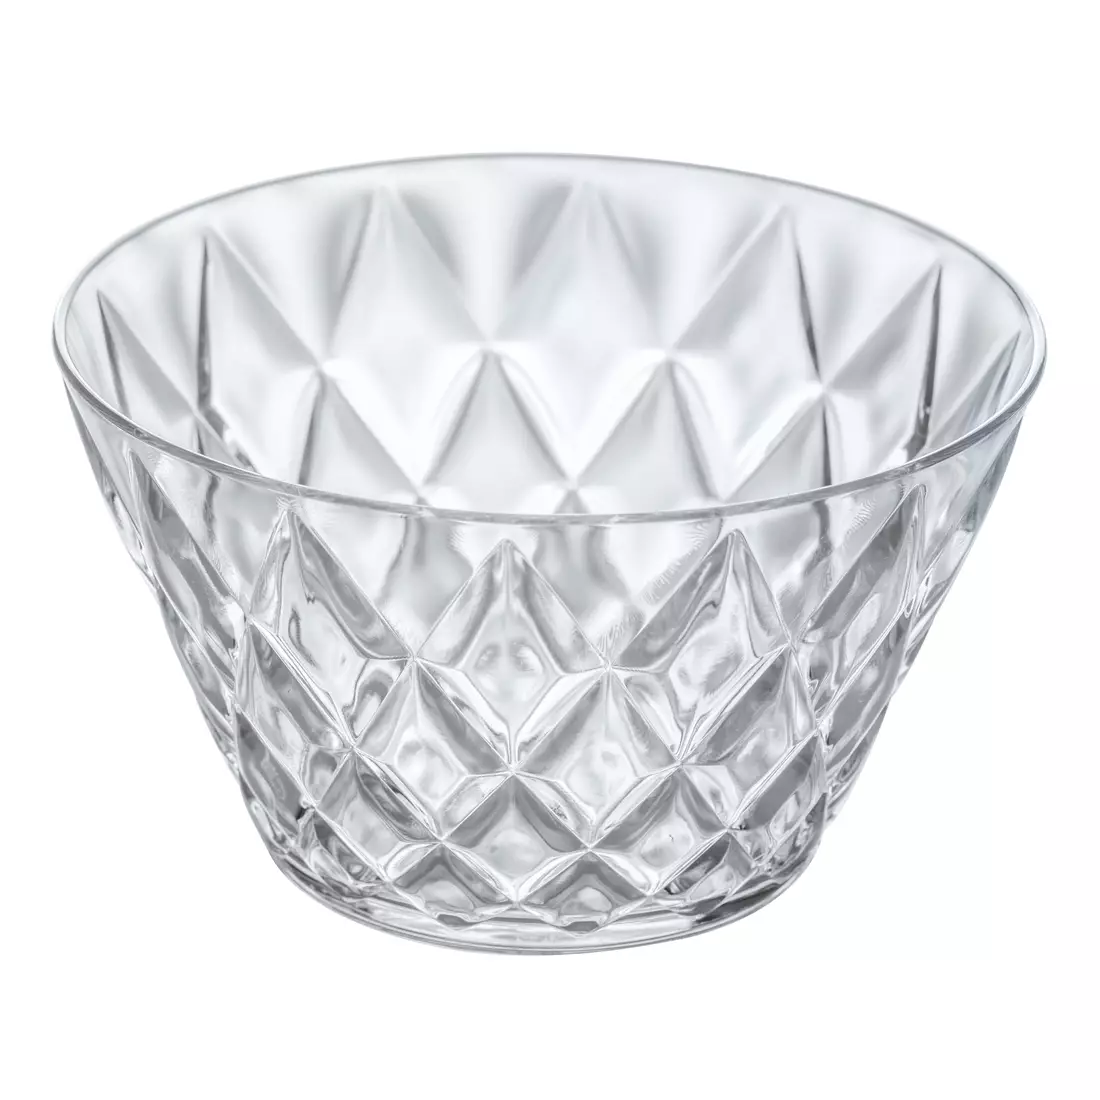 Koziol Crystal Bowl bowl 500ml, transparent